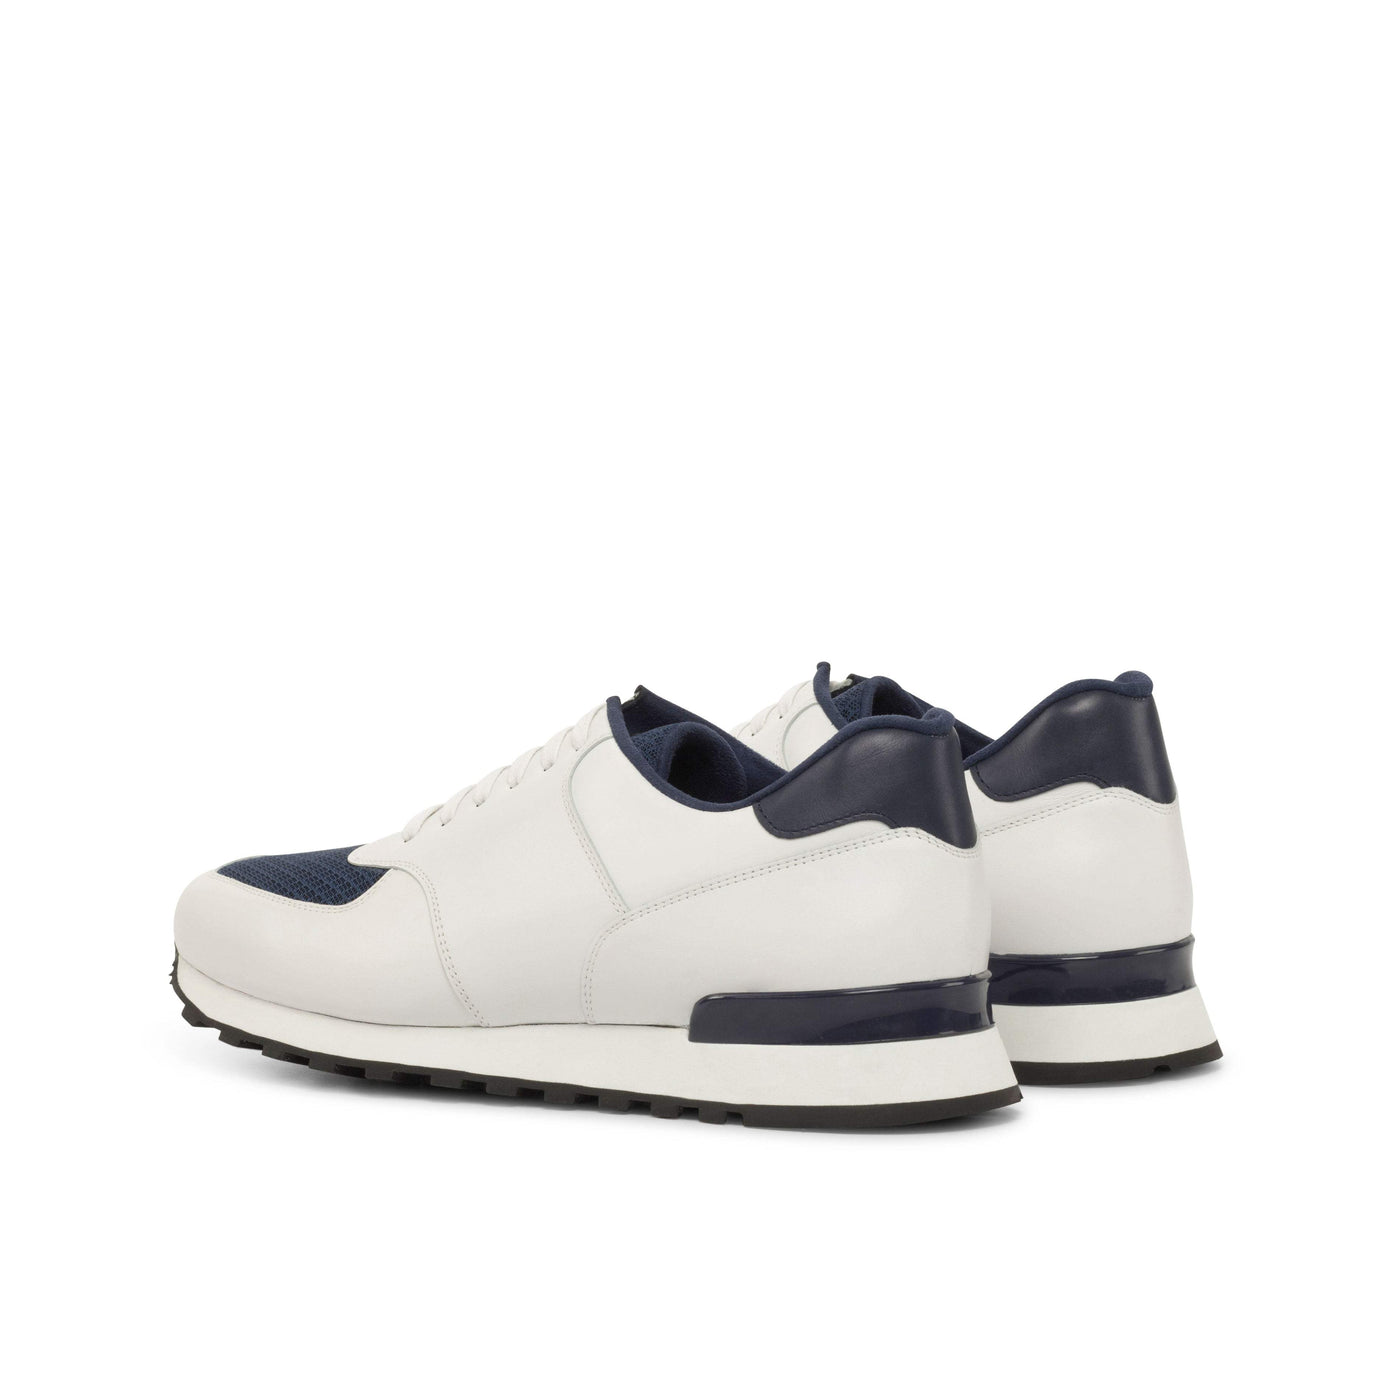 Men's Jogger Sneakers Leather Blue White 4903 4- MERRIMIUM